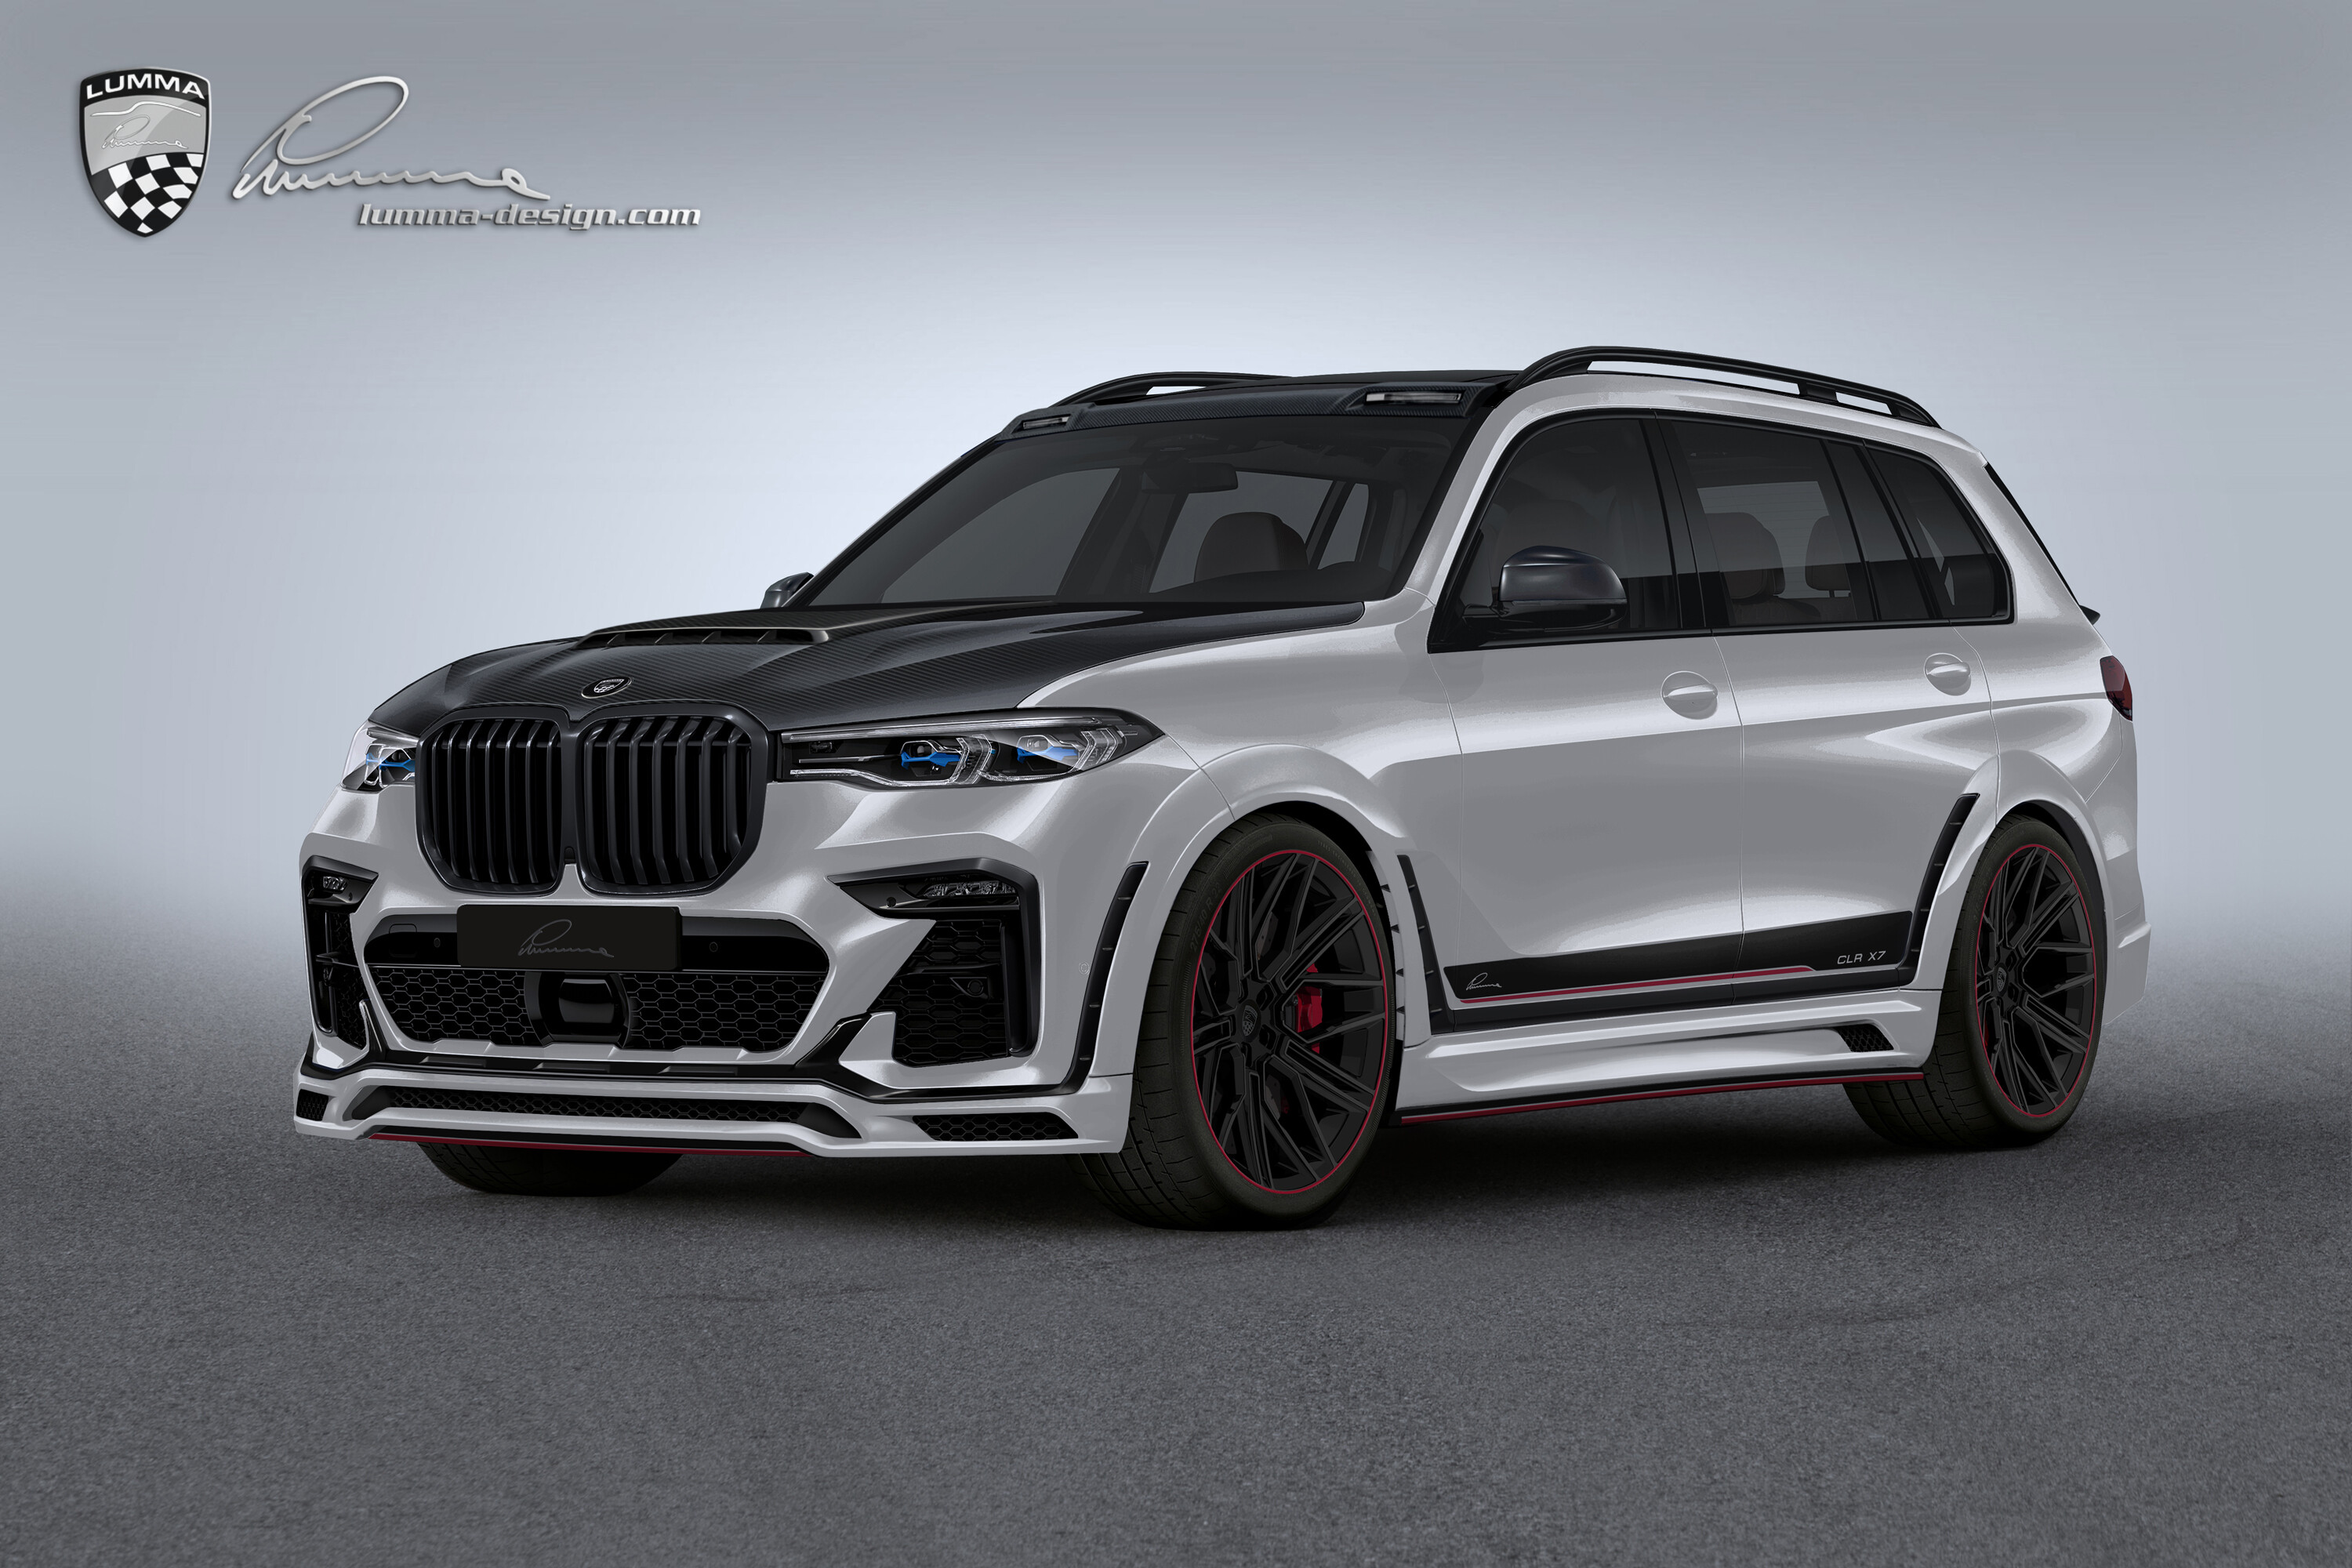 BMW X7 – Aggressive Body Look, Tuning By Lumma Design